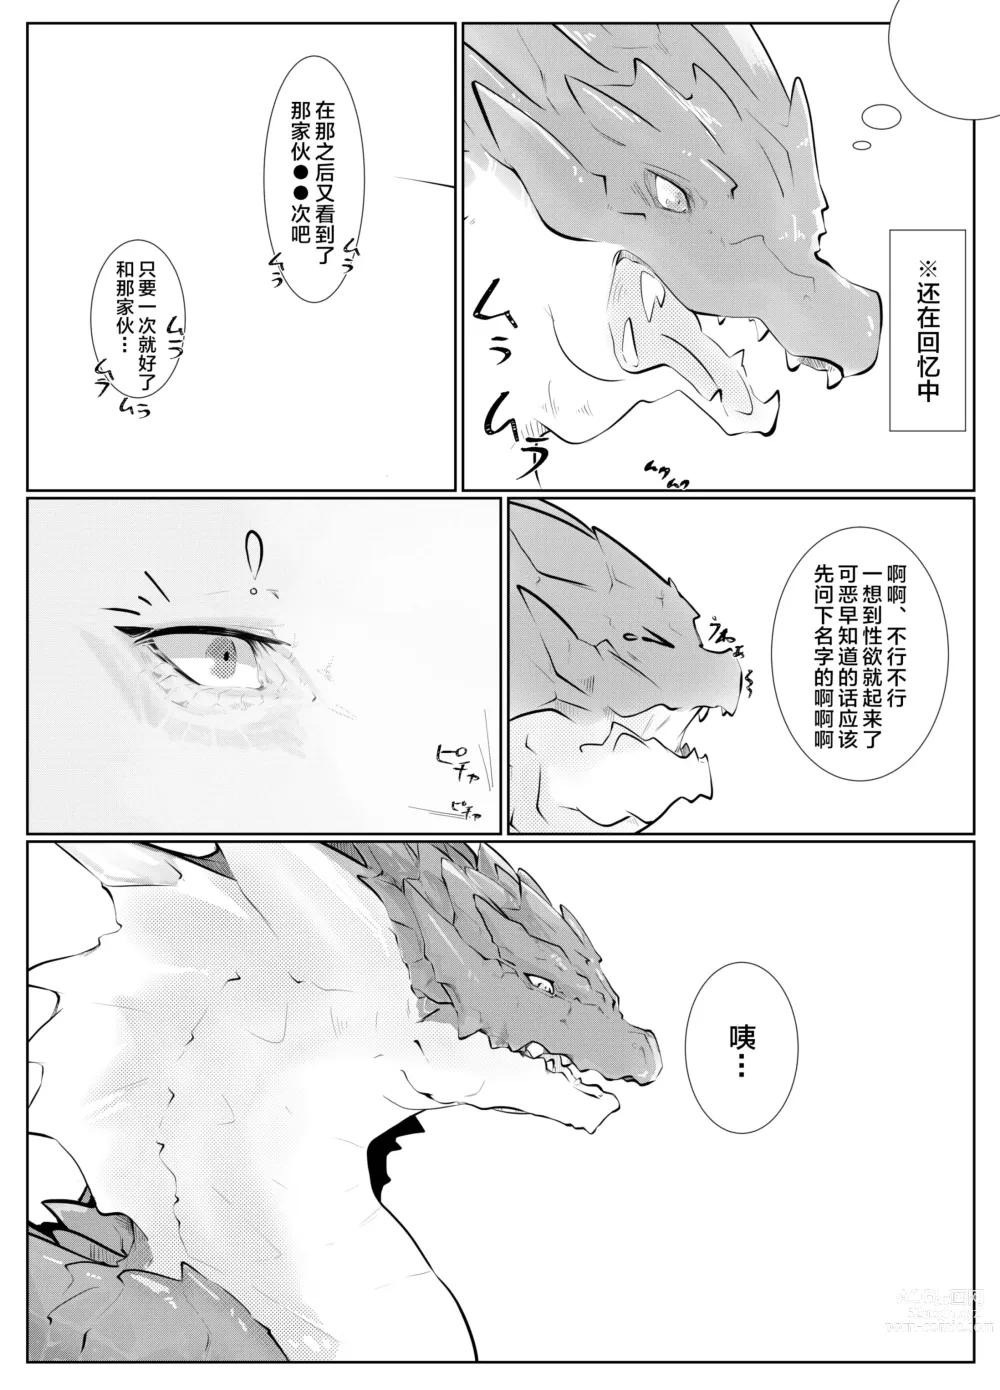 Page 16 of doujinshi 泡沫